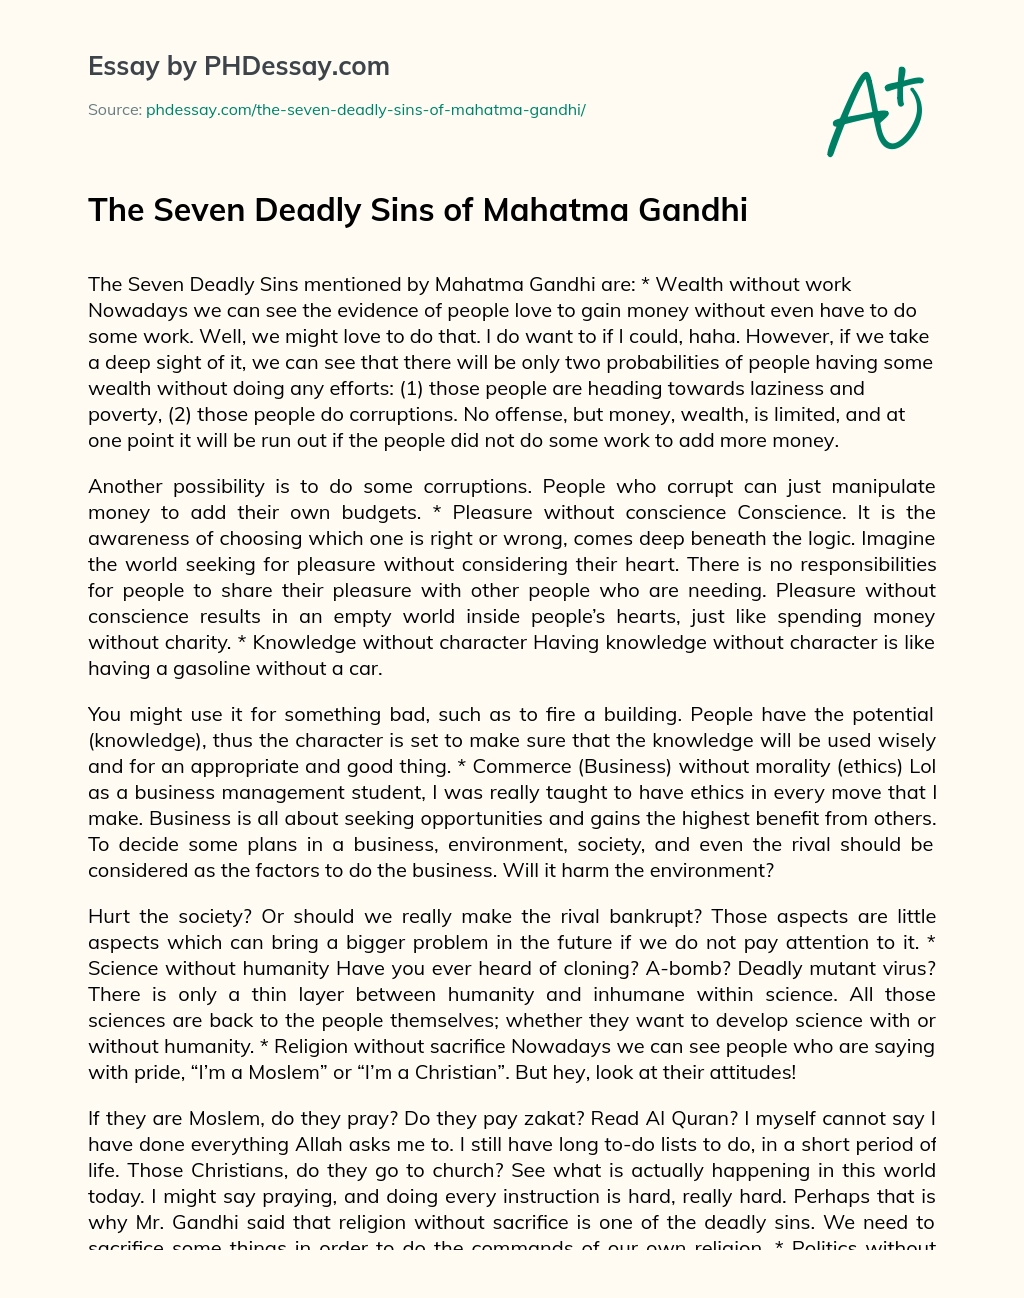 The Seven Deadly Sins of Mahatma Gandhi essay